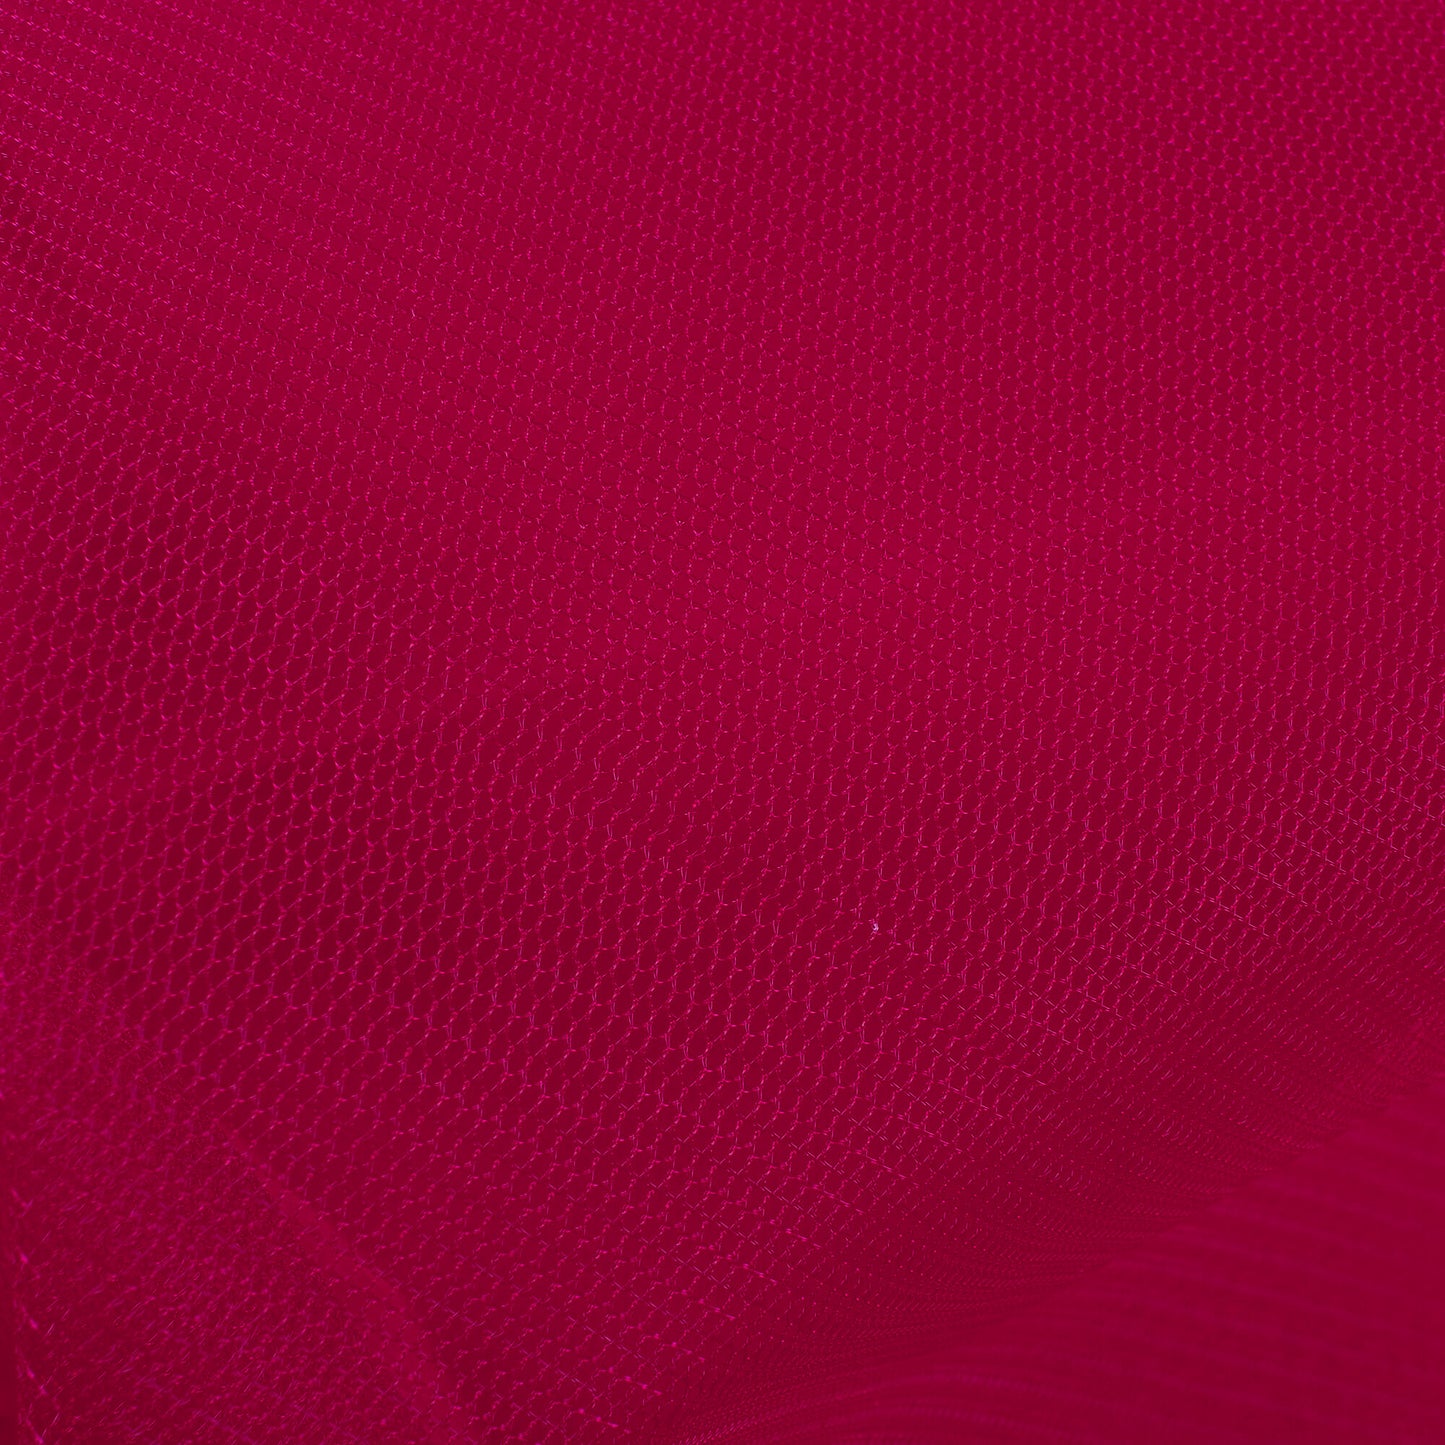 Magenta Pink Plain Premium Quality Butterfly Net Fabric